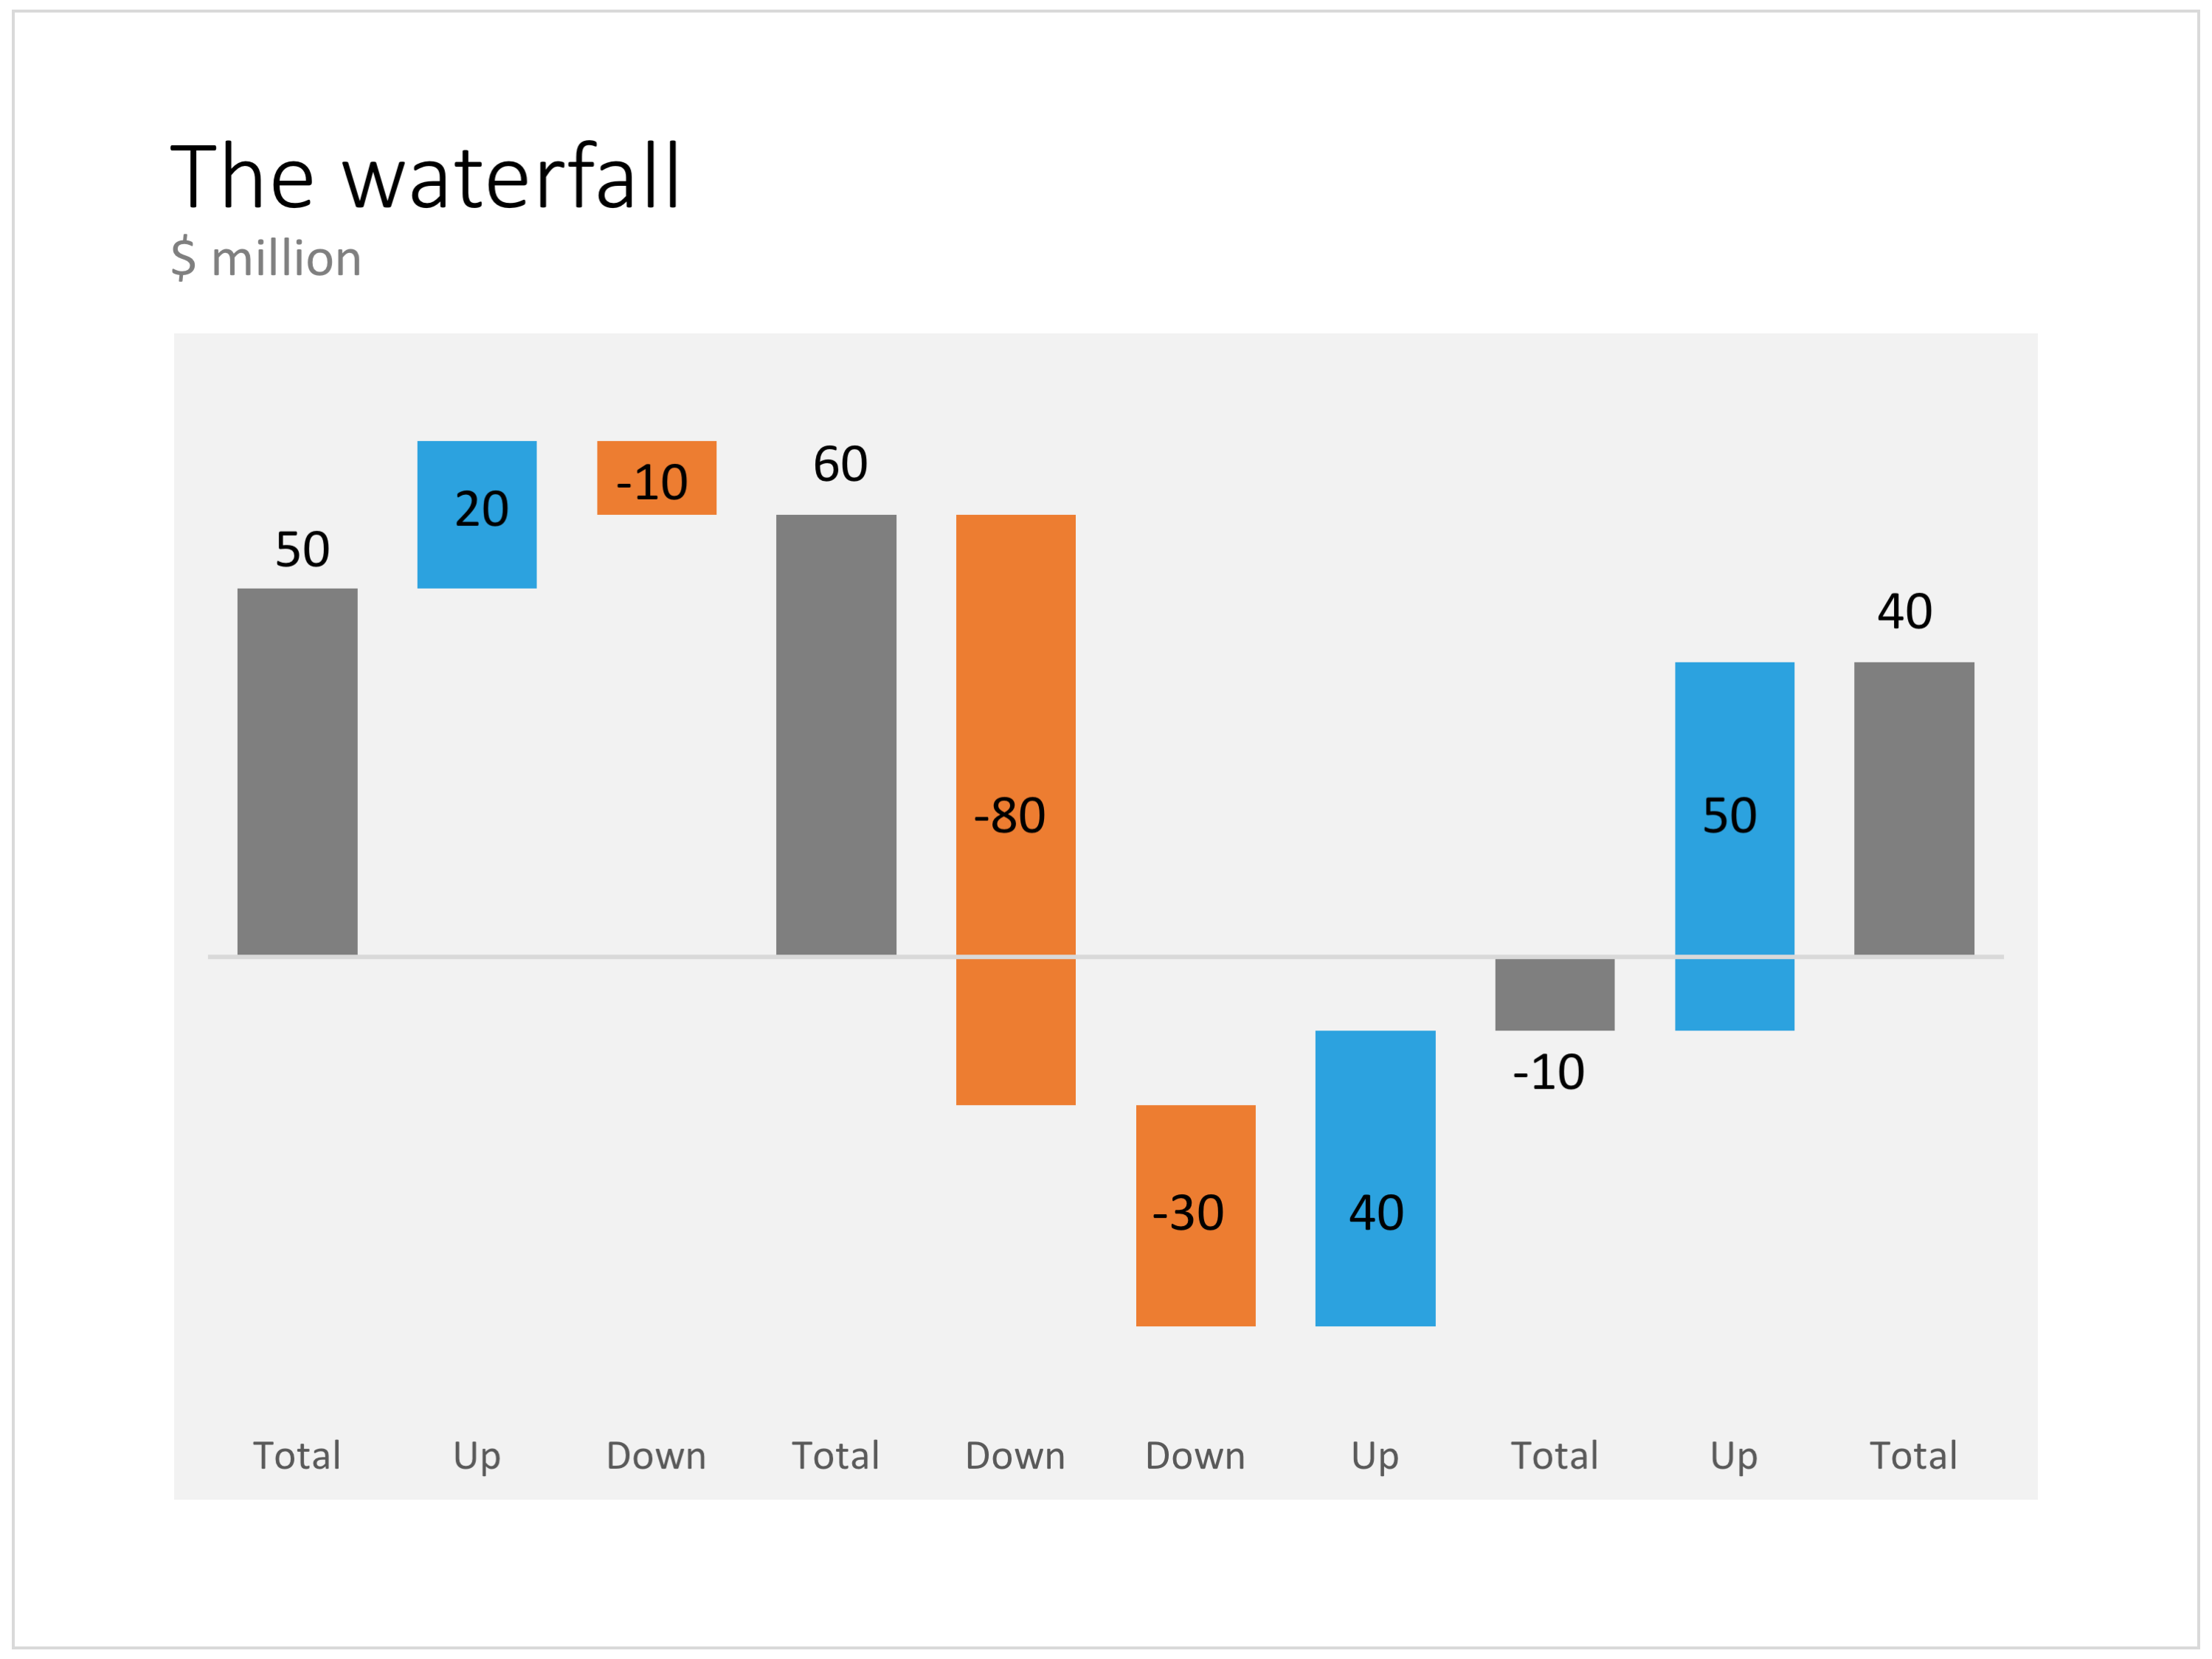 Waterfall Chart Powerpoint 2013